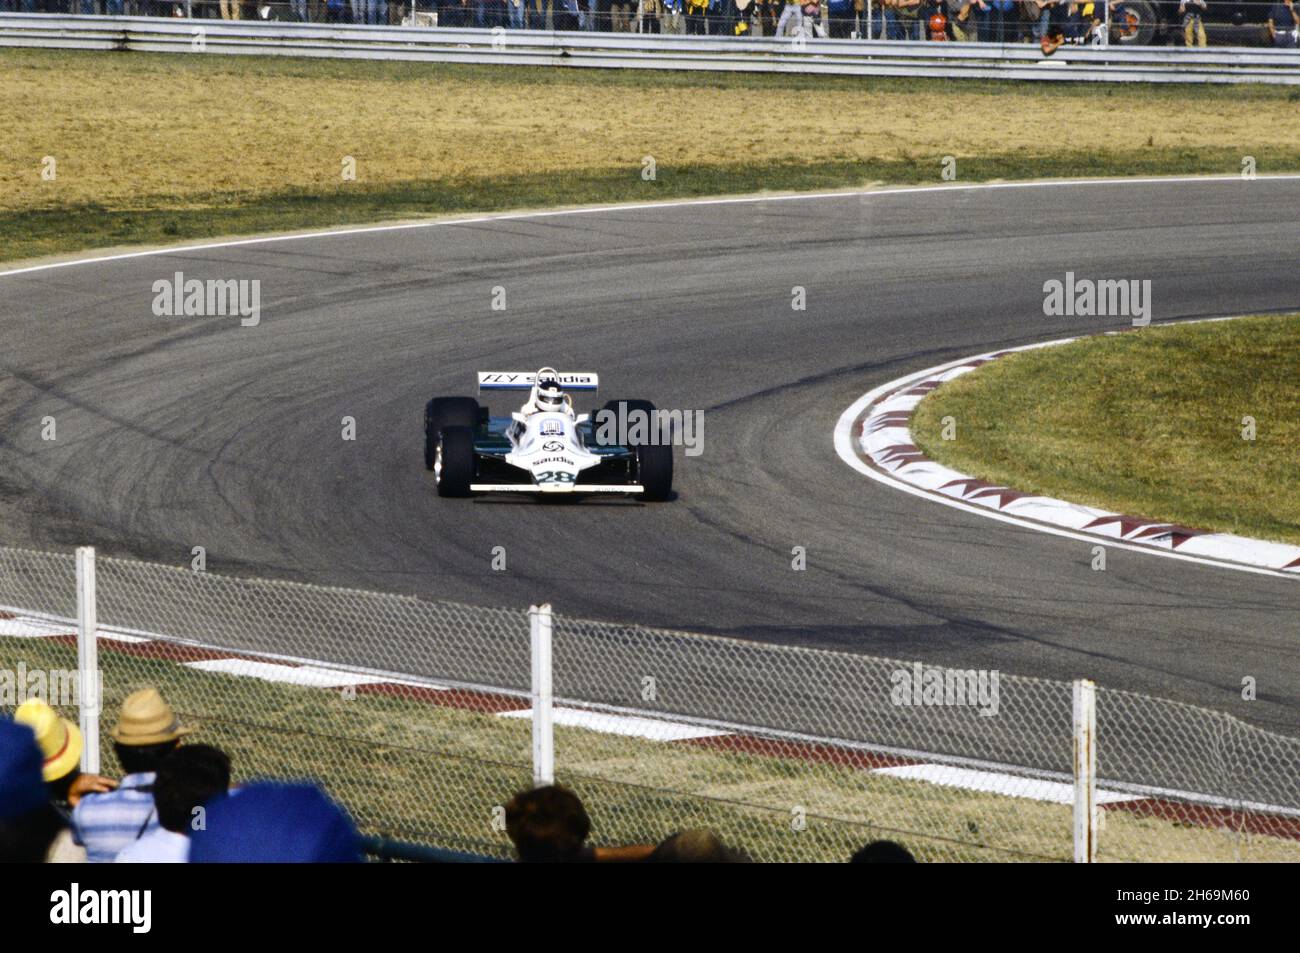 Imola, 1980: Tests of Formula 1 at Imola Circuit. Carlos Reutemann in action on Williams fw07. Stock Photo